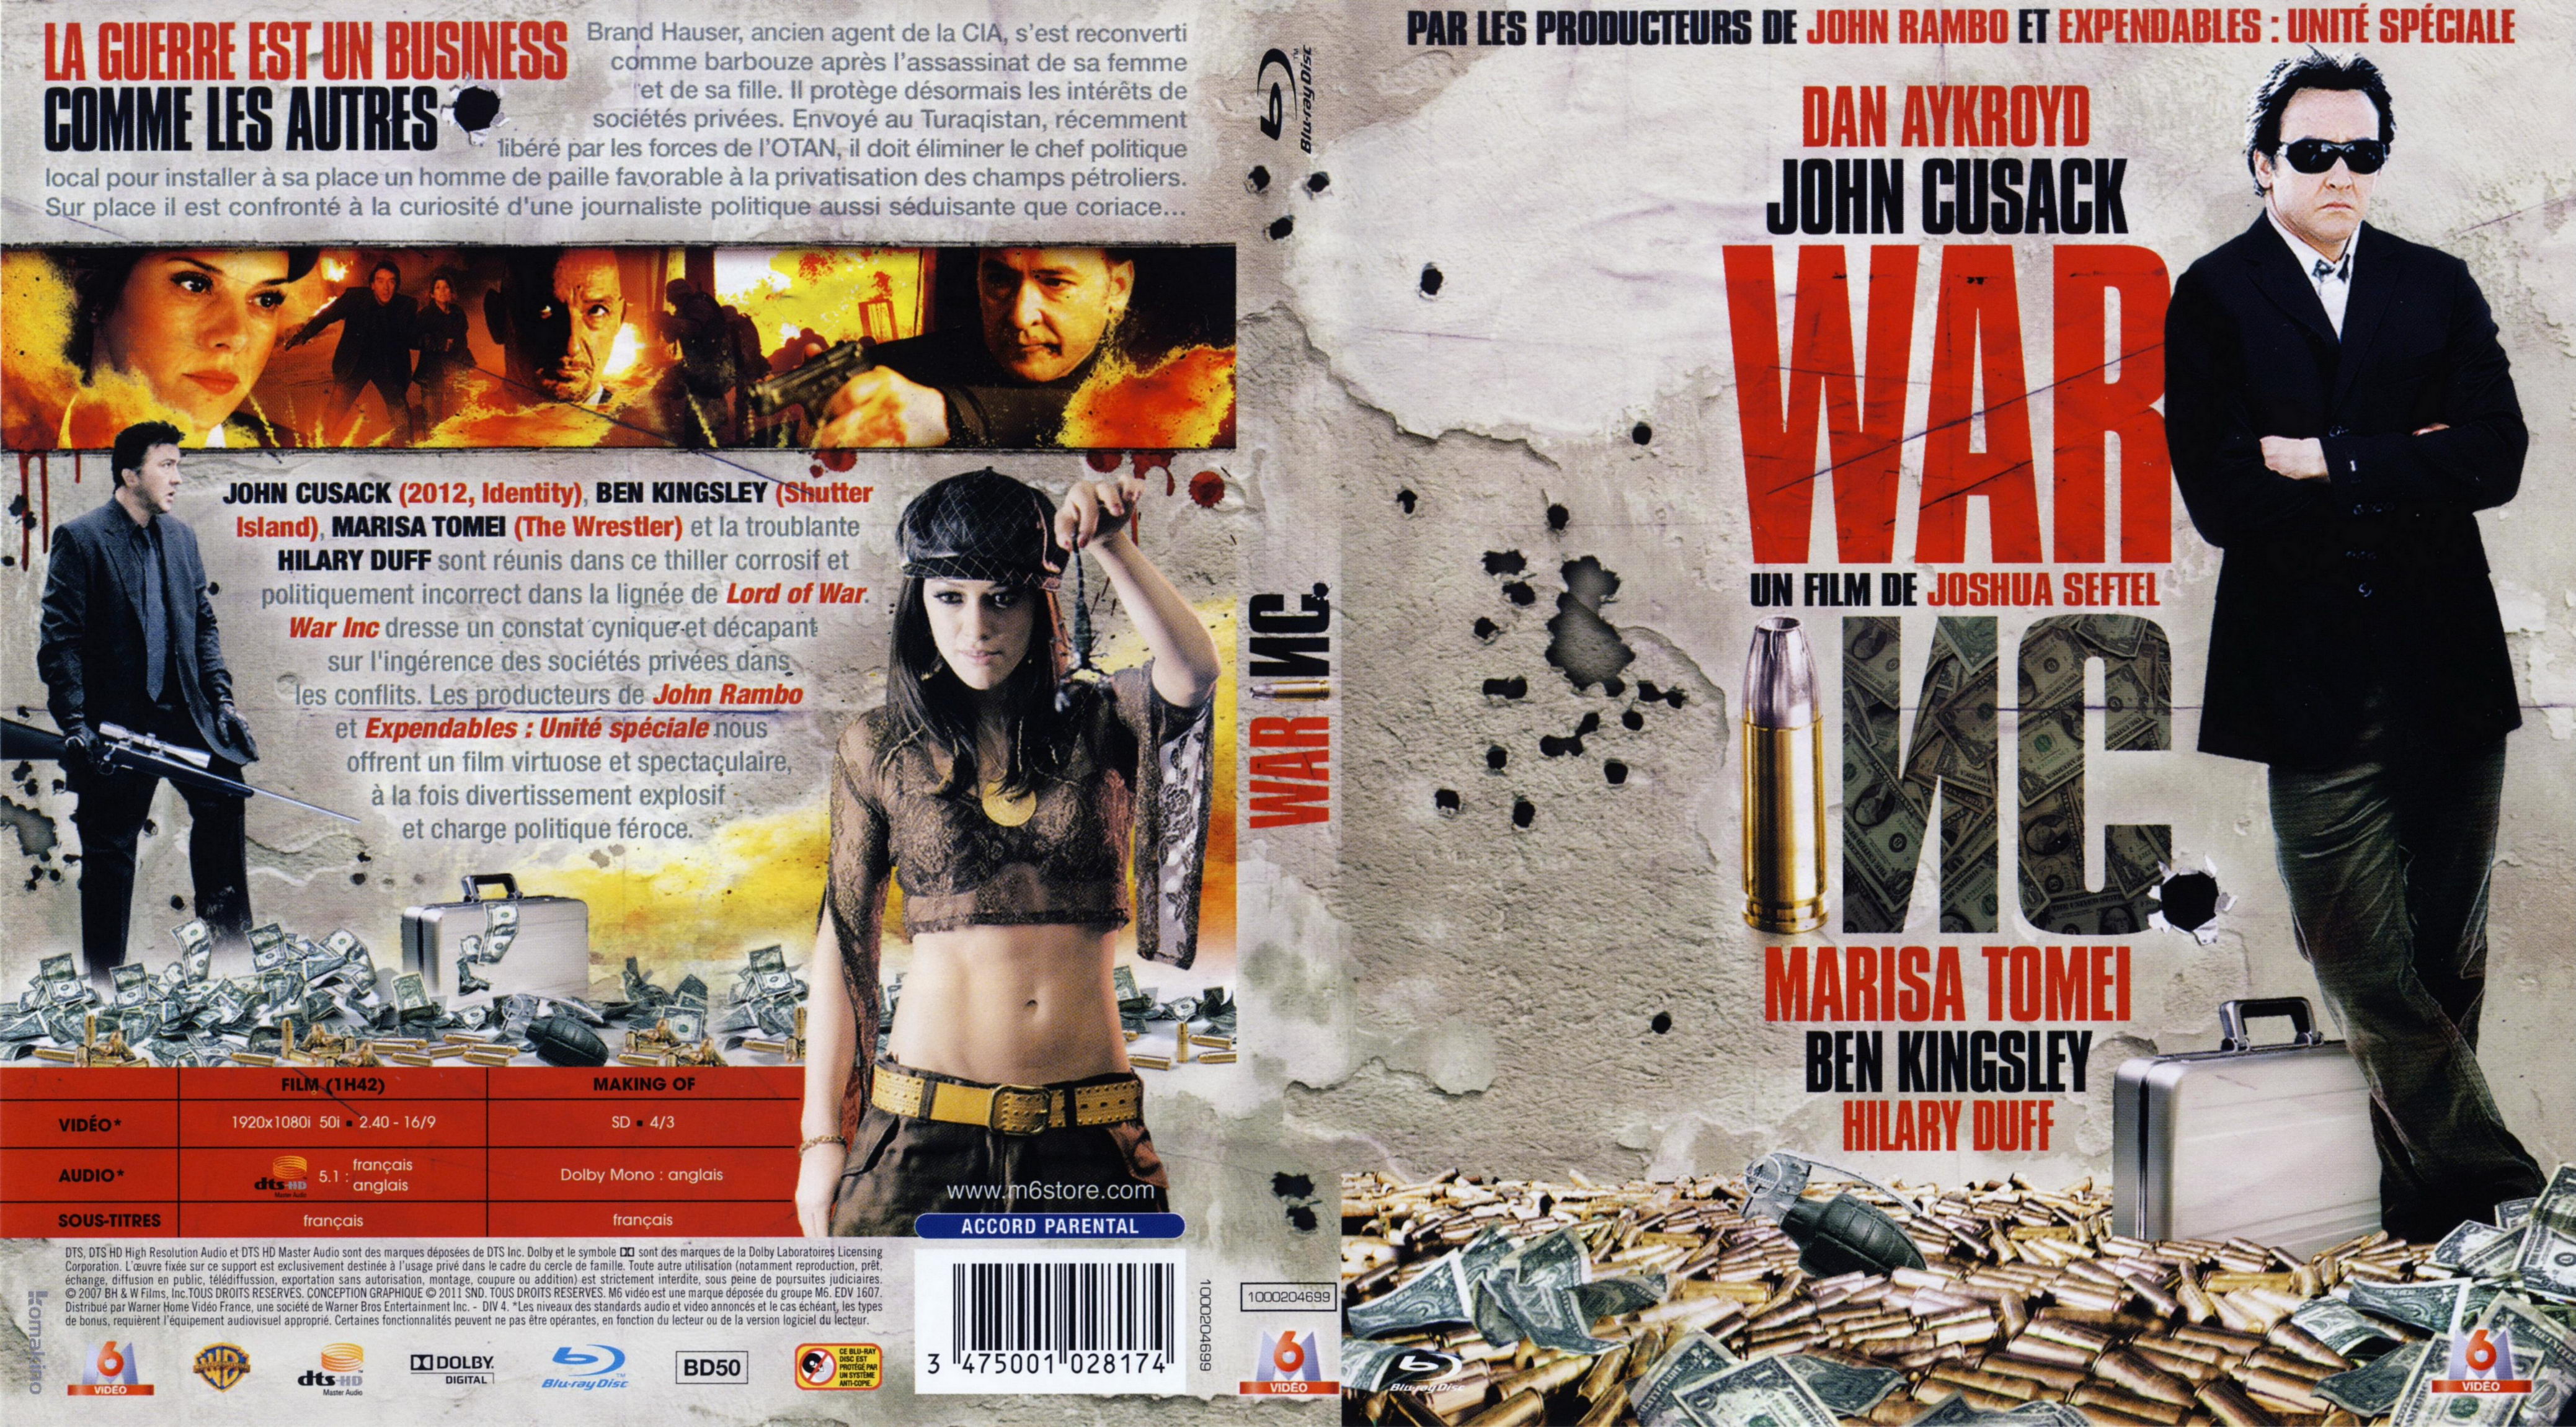 Jaquette DVD War inc (BLU-RAY)